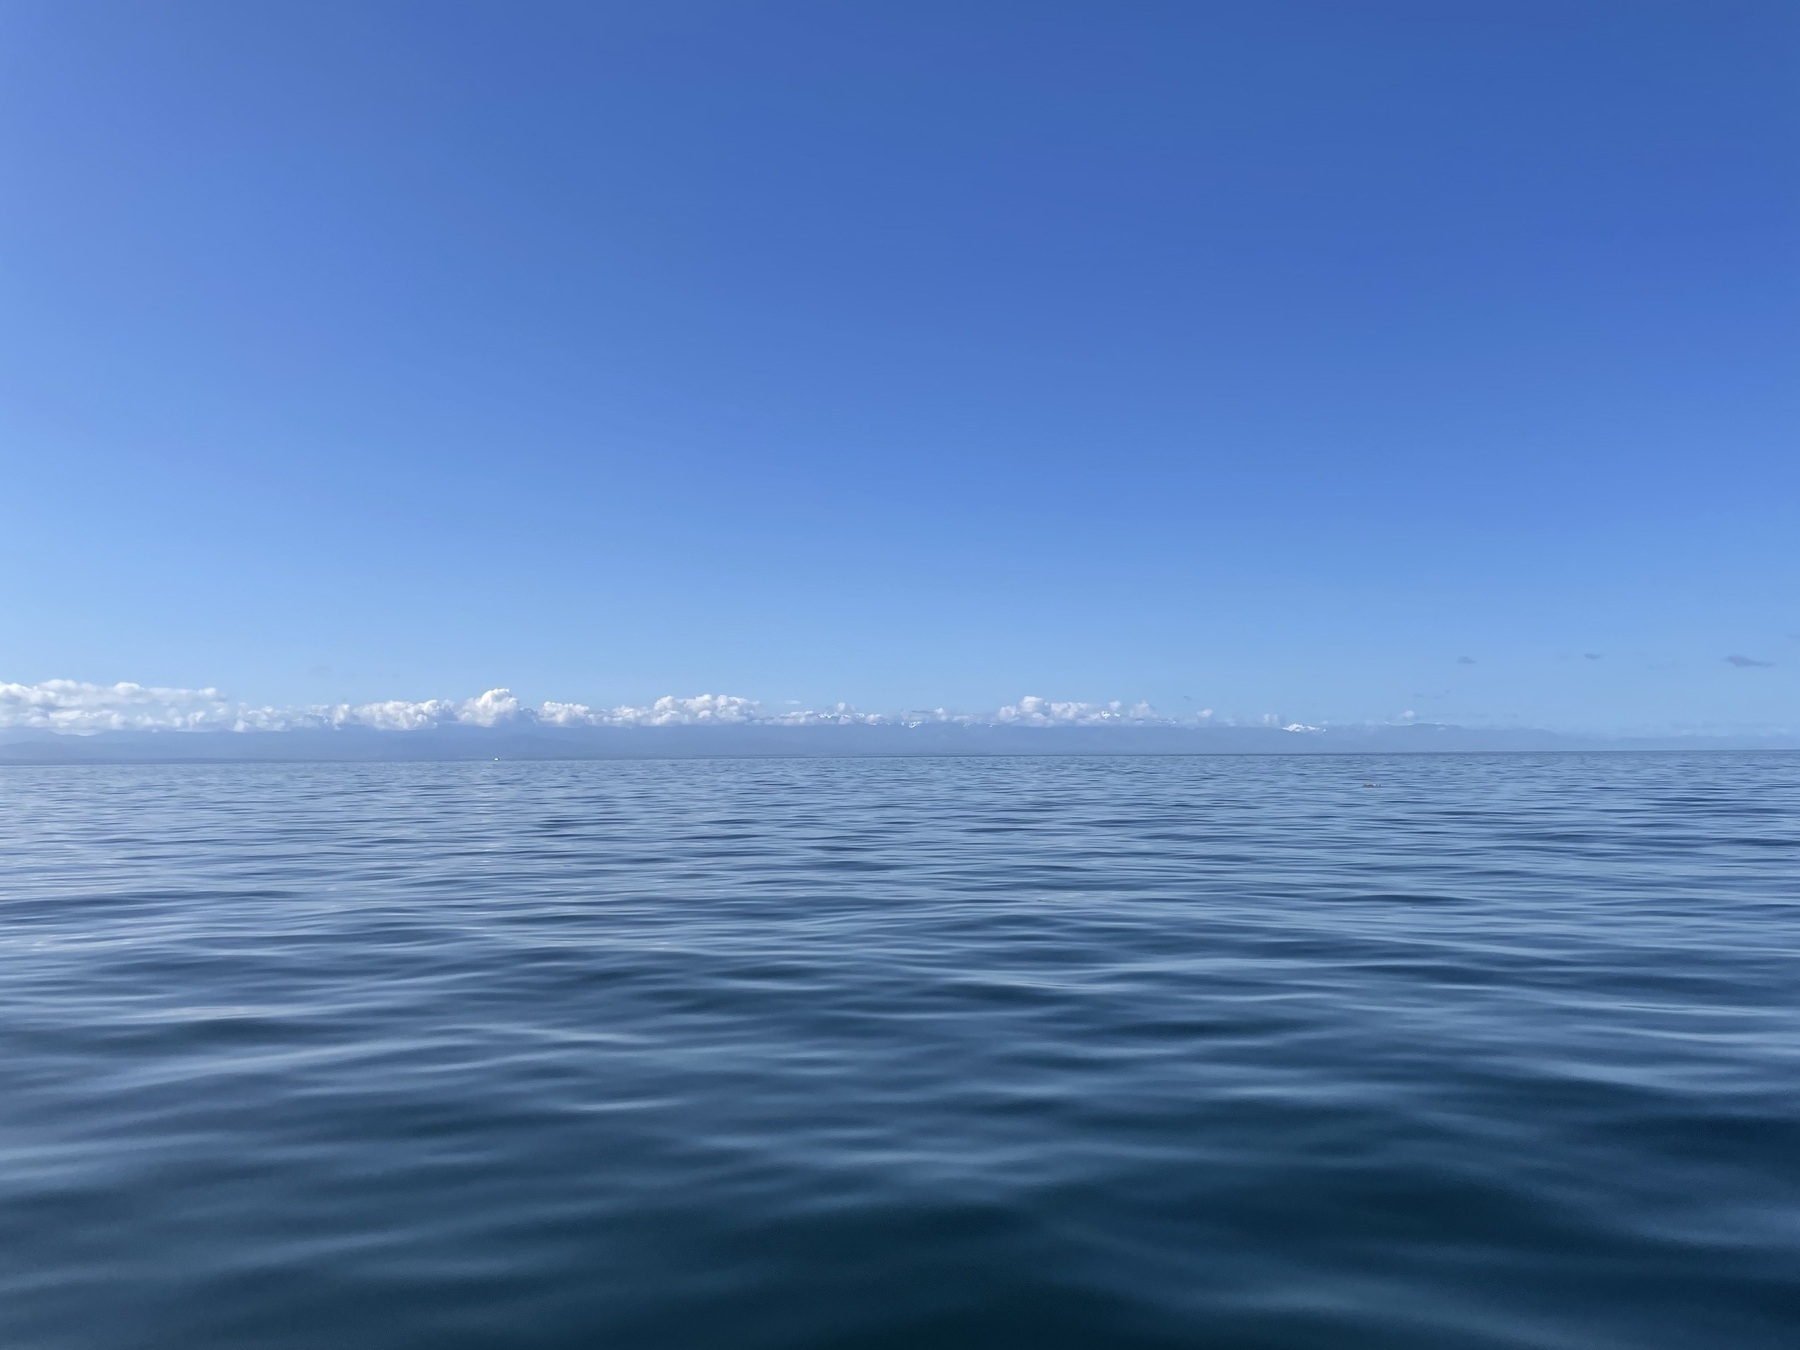 Strait of Juan de Fuca on a clear, calm day